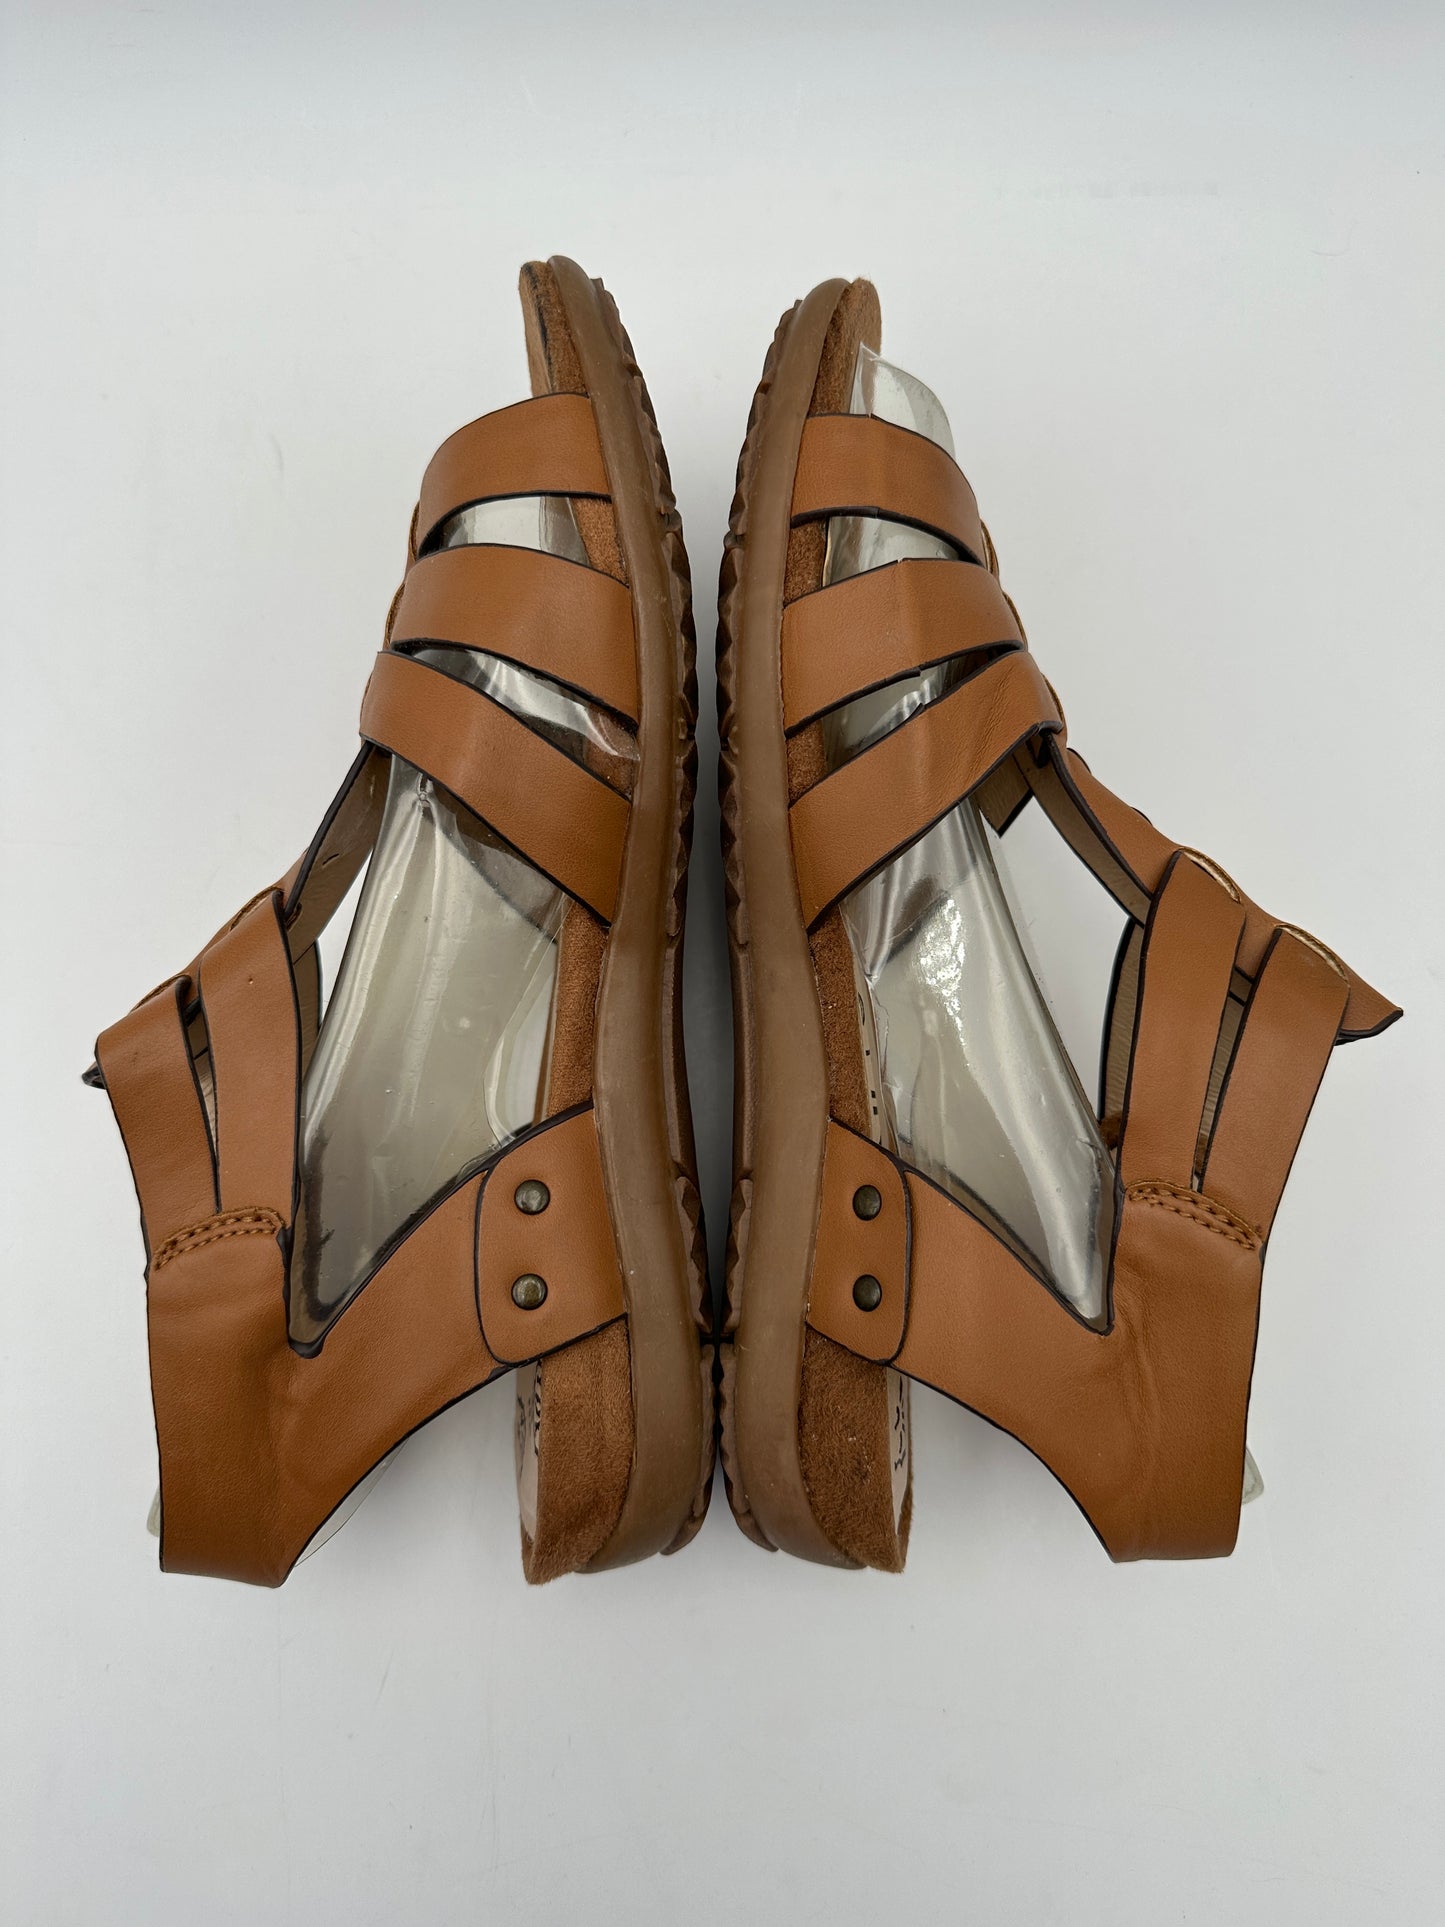 Bare Traps Size 7.5 M Tan Vegan Leather "Rylan" Strappy Gladiator Sandals